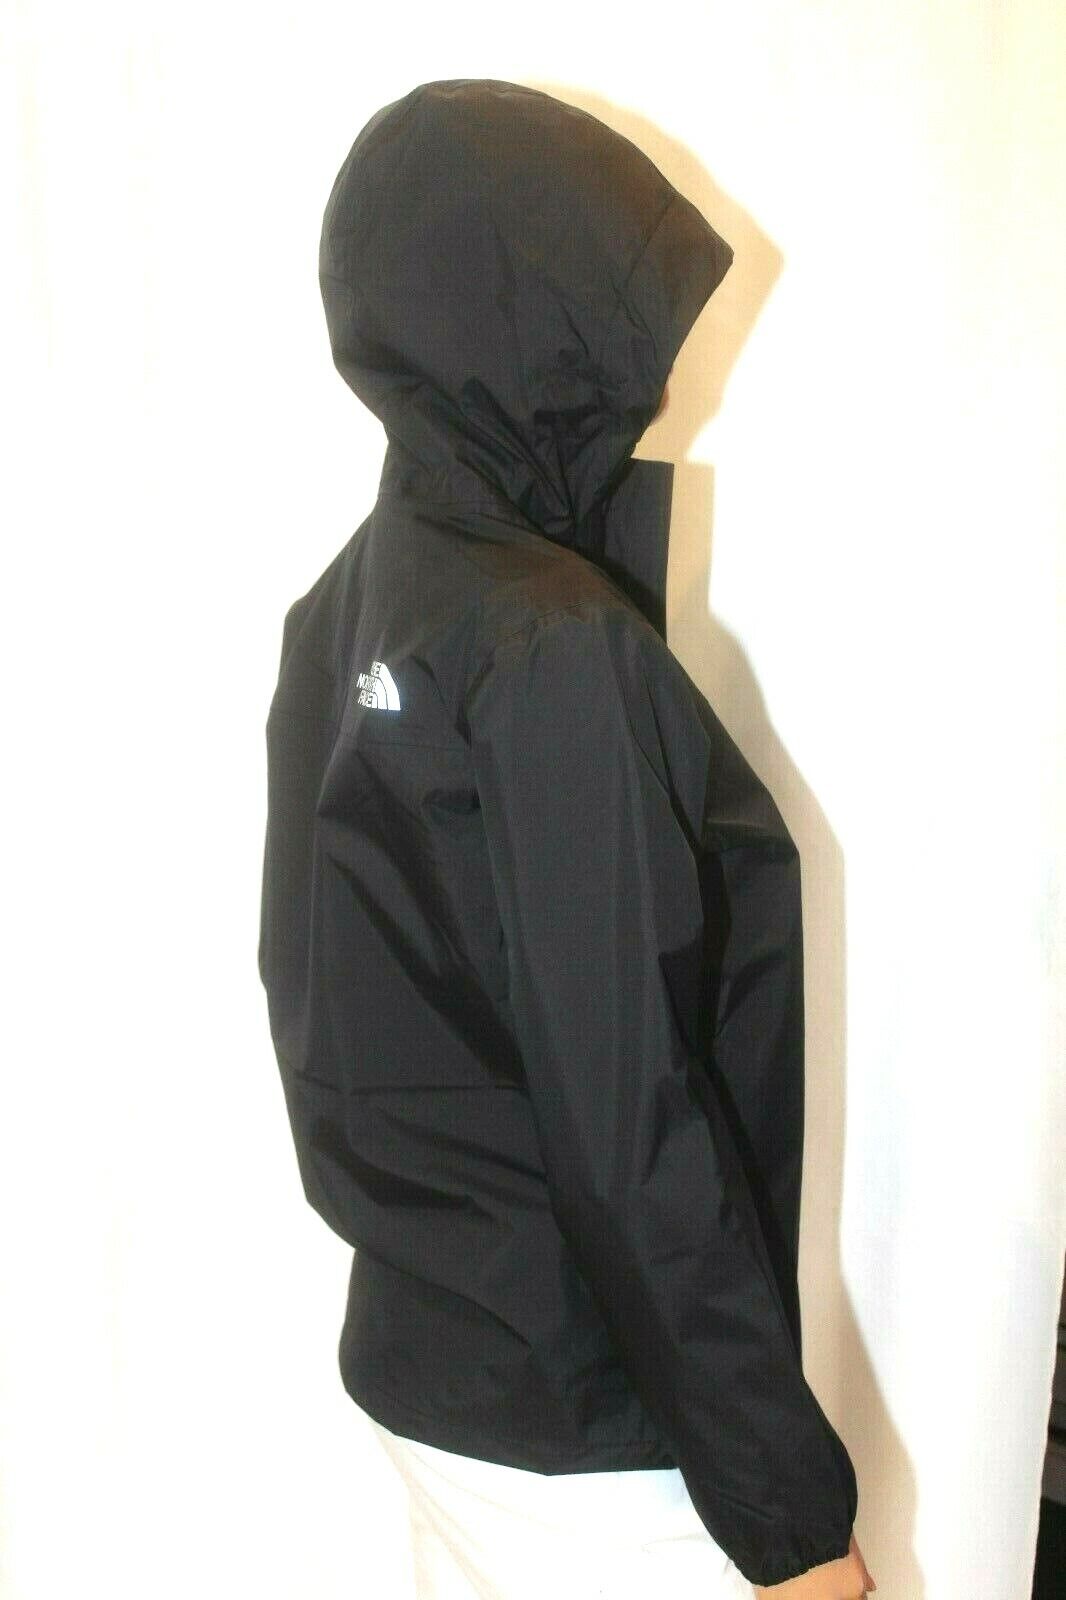 *NWT* $70. North Face Resolve Reflective Girls Black Rain Jacket HyVent Hood - S